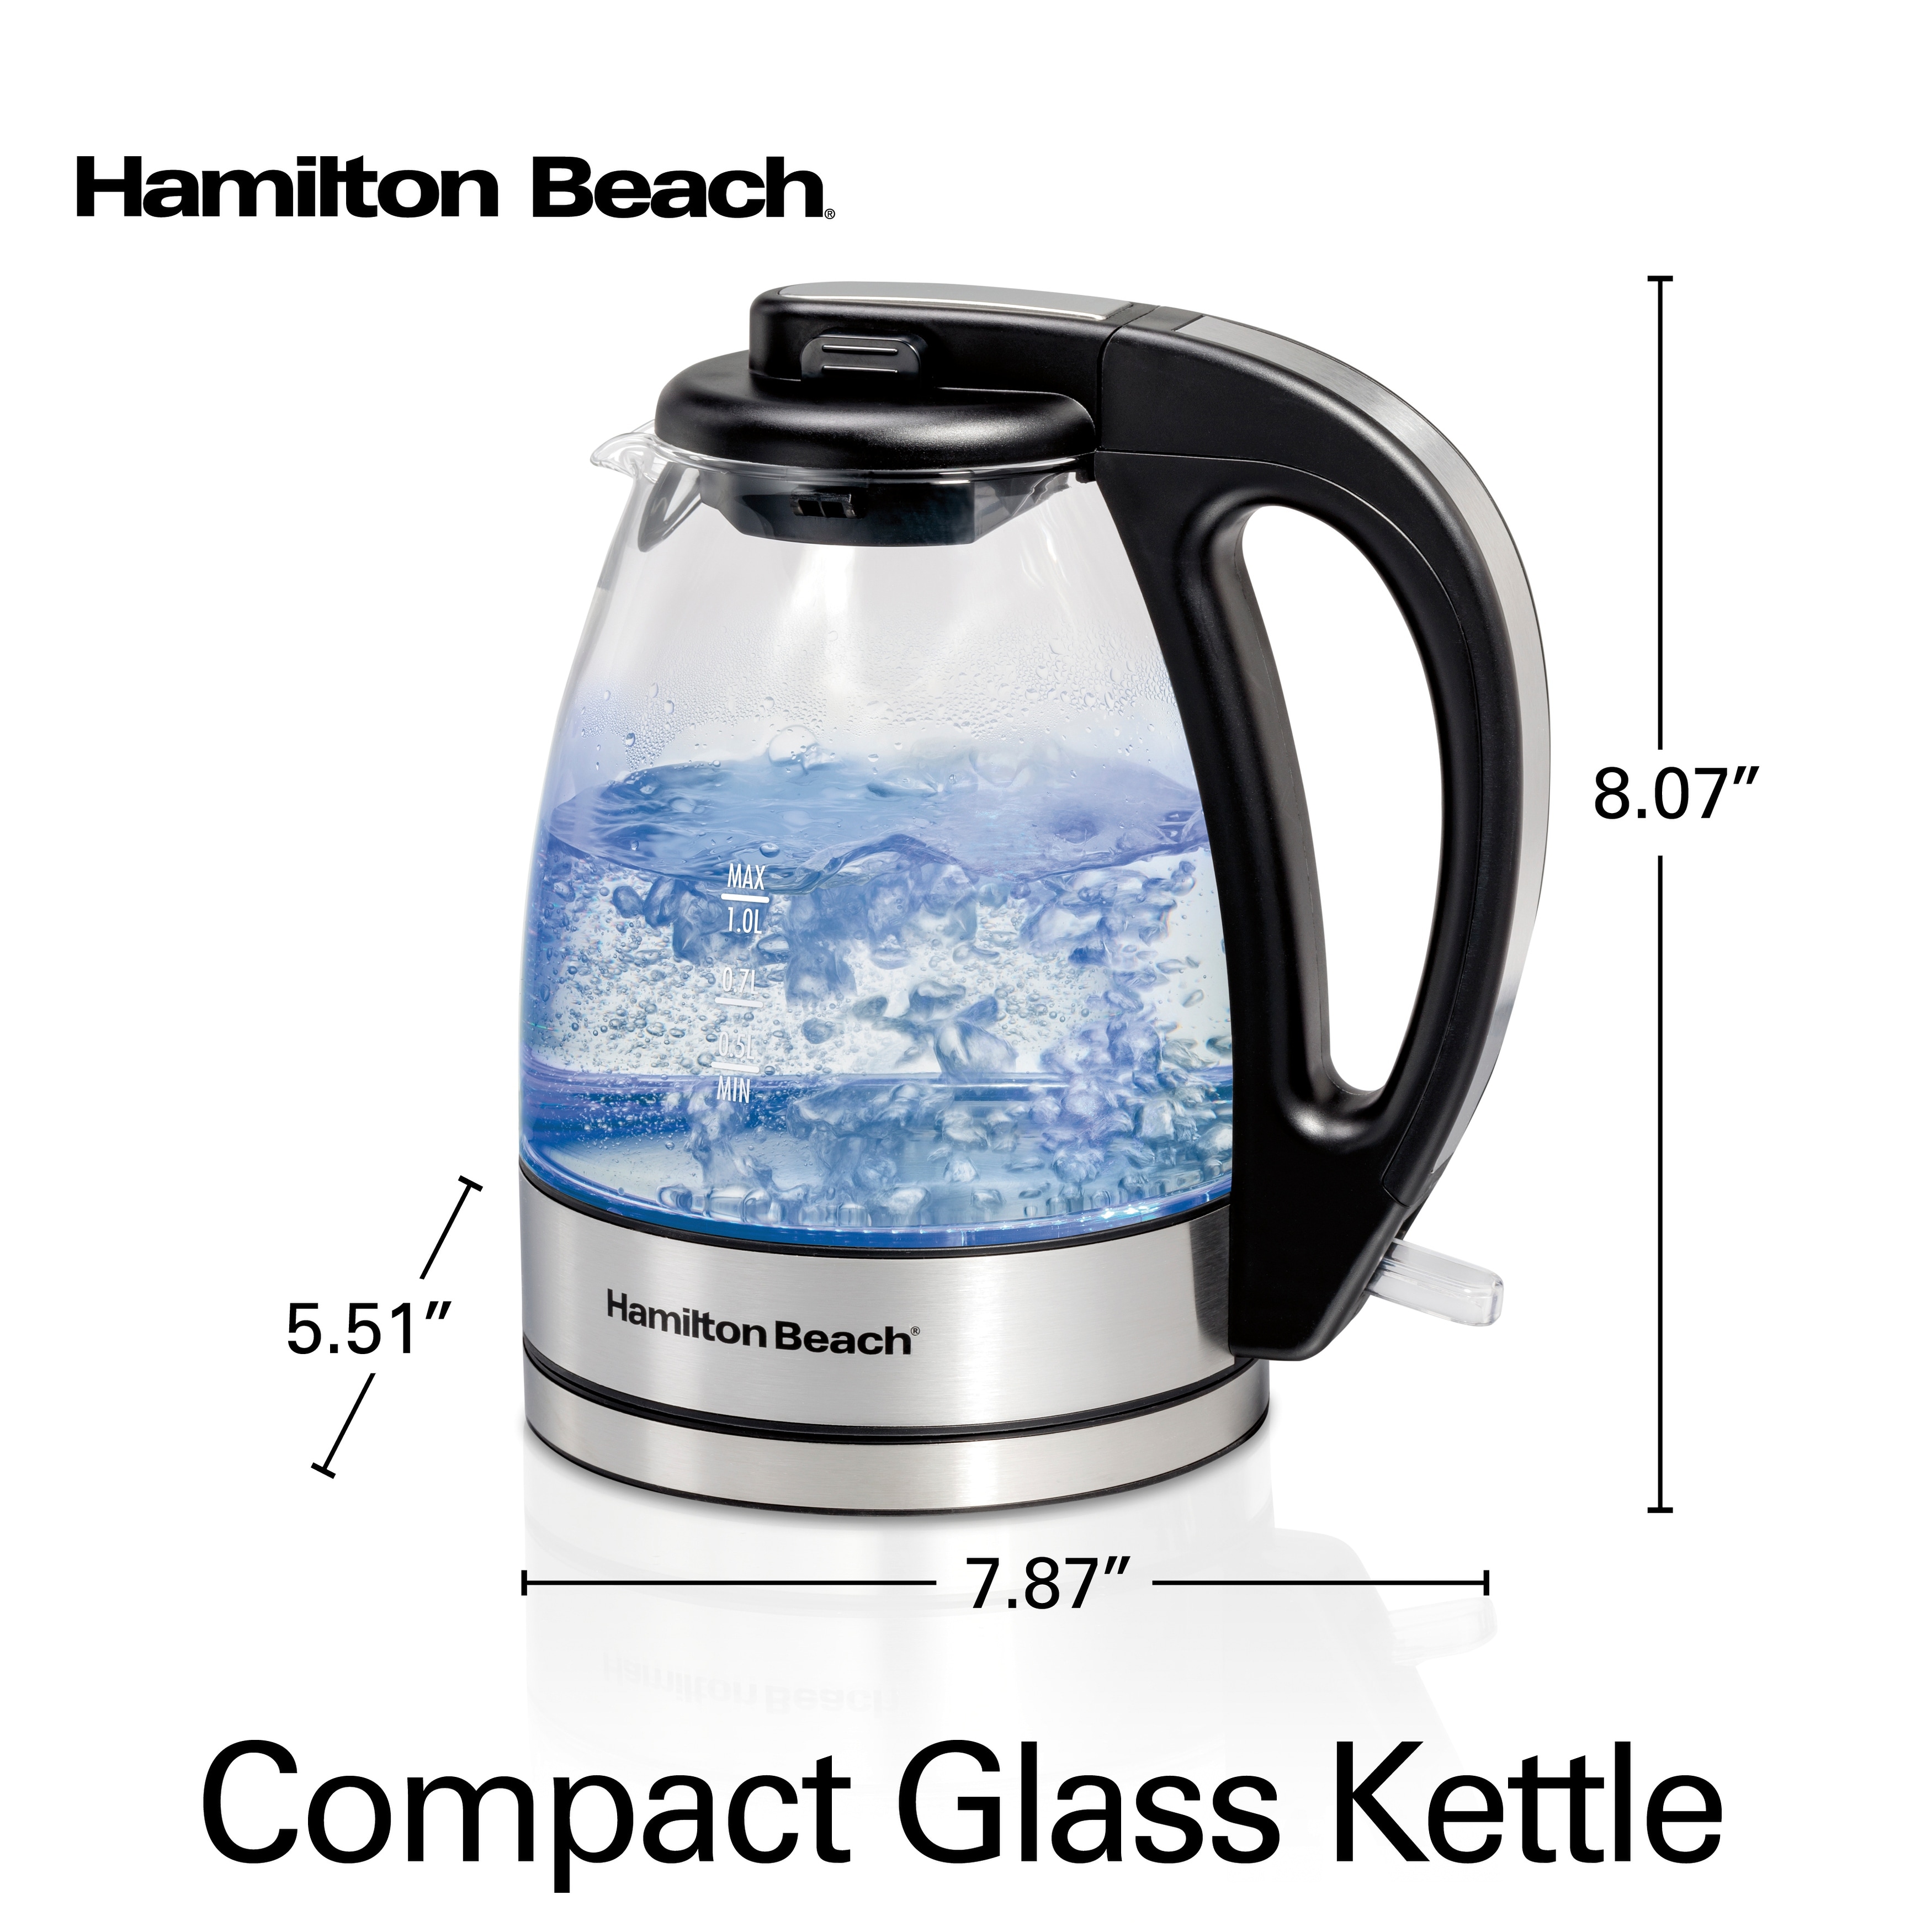 Hamilton Beach 1.0 Liter Glass Kettle